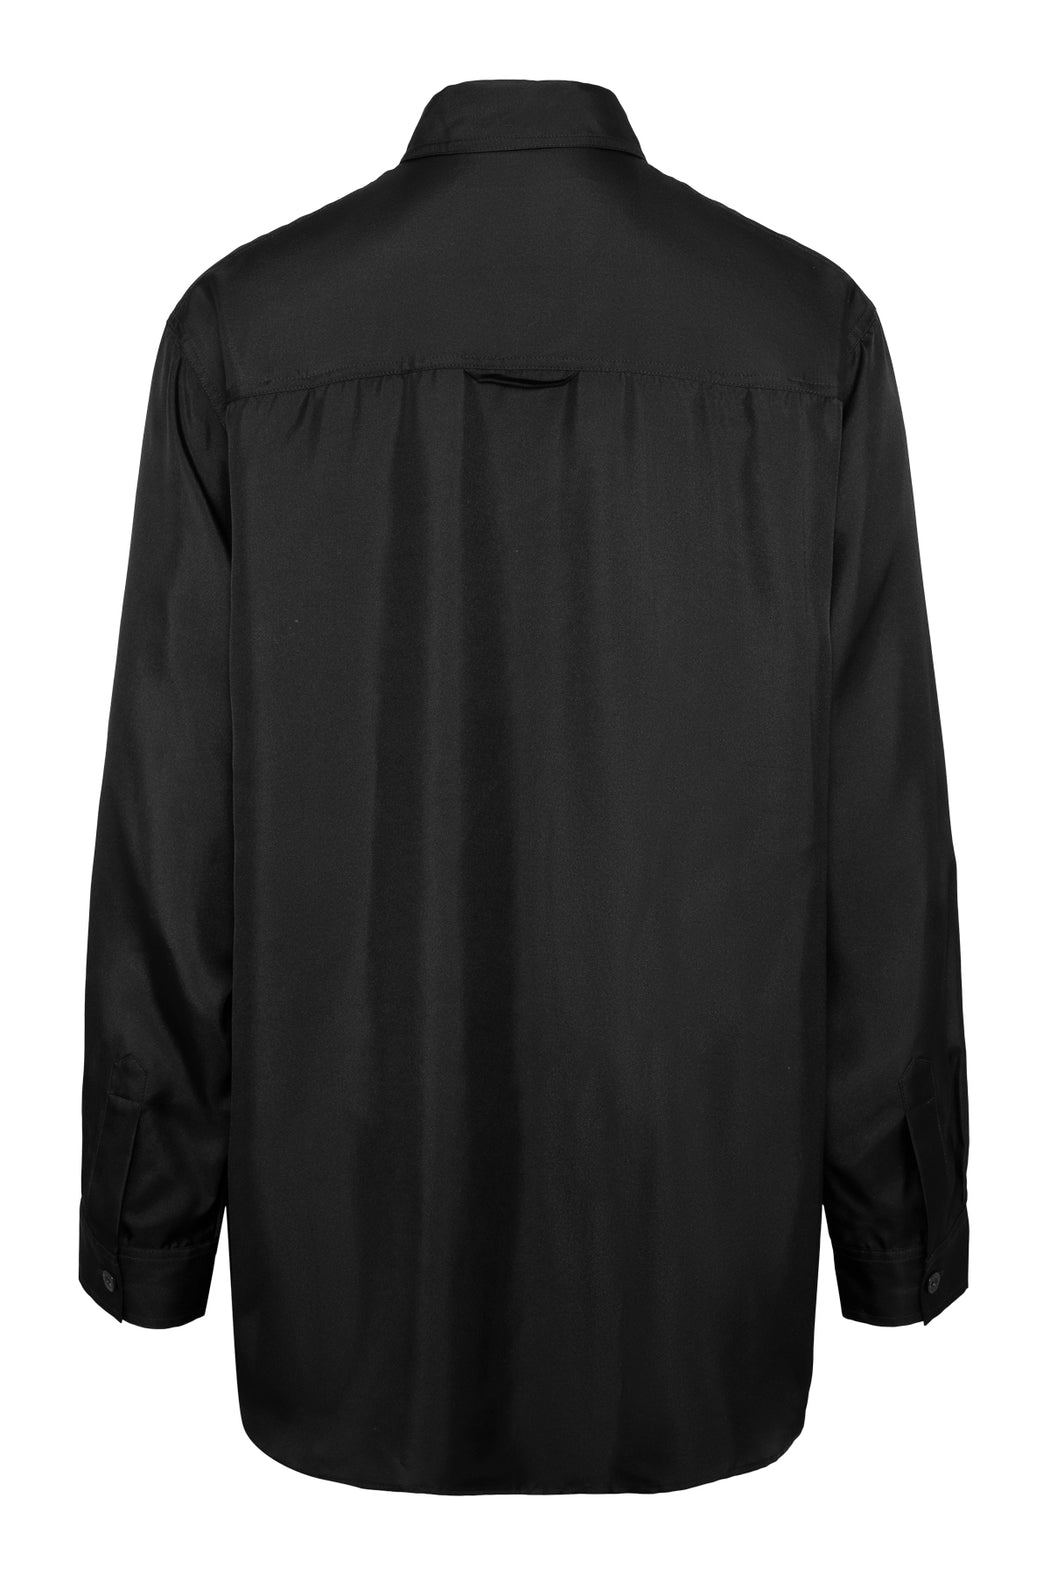 Envelope1976 Blank shirt - Silk Shirt Black